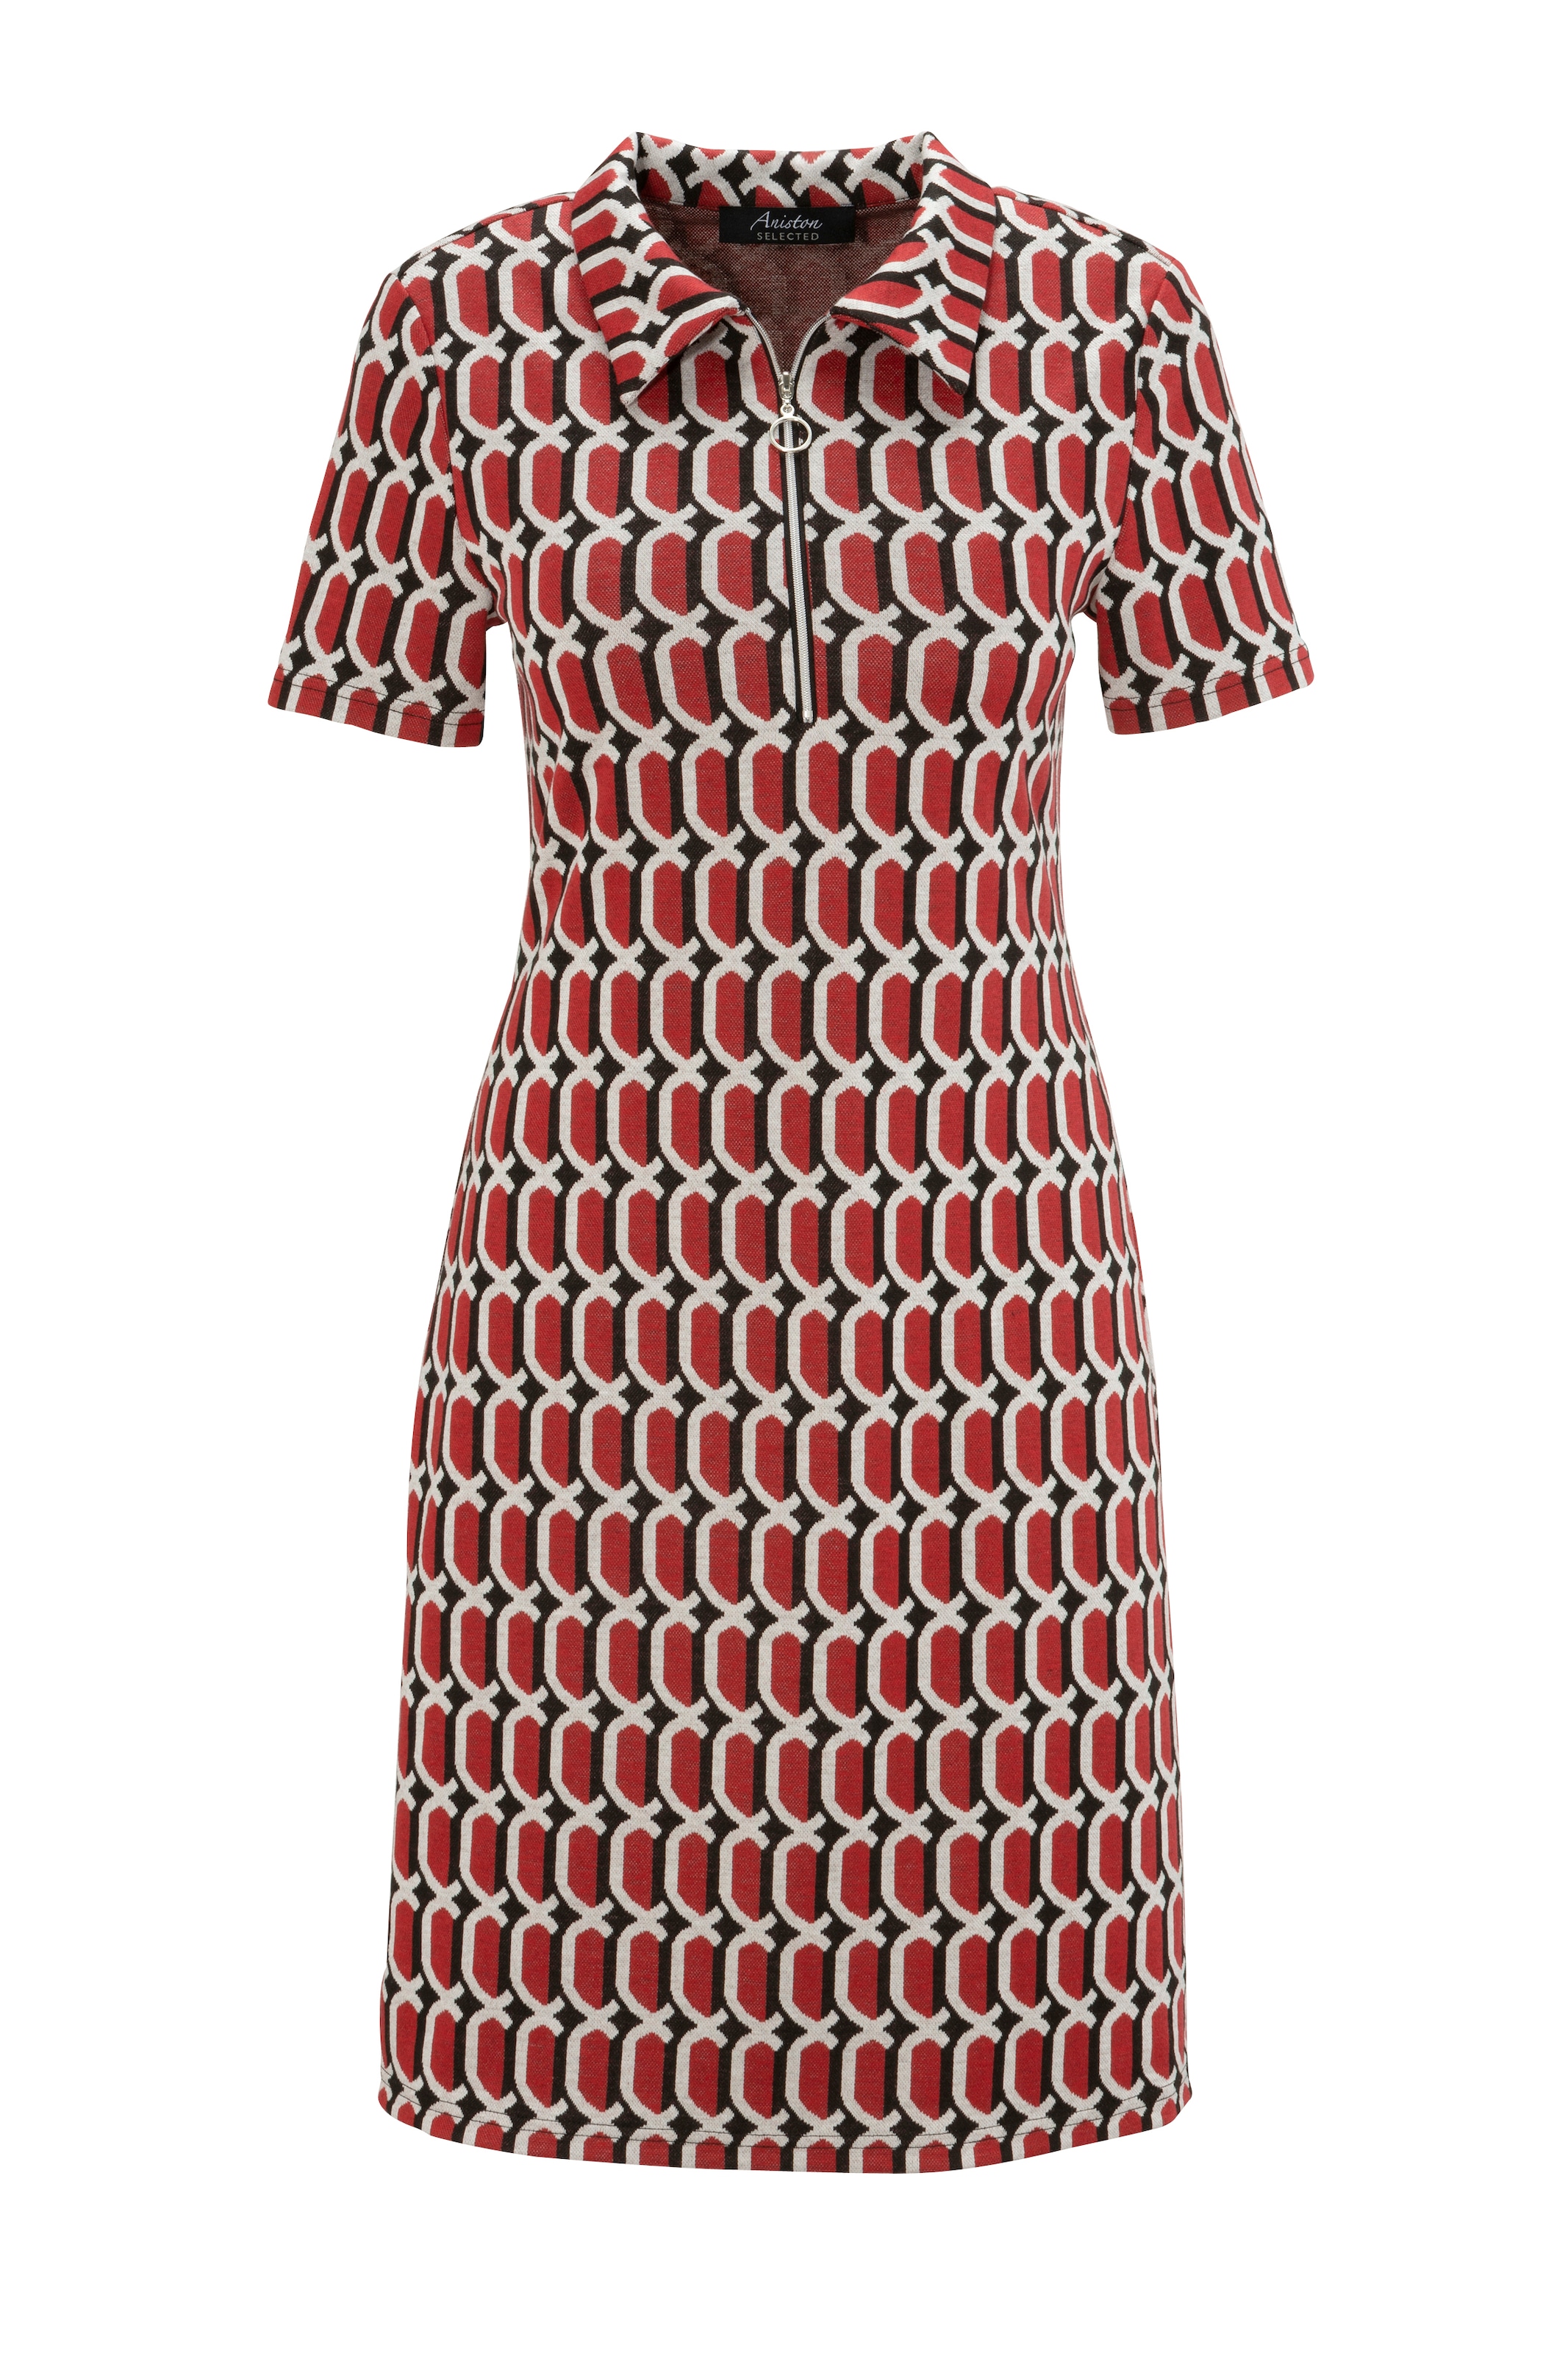 Aniston SELECTED Jerseykleid, mit silberfarbenem Reißverschluss - NEUE KOLLEKTION